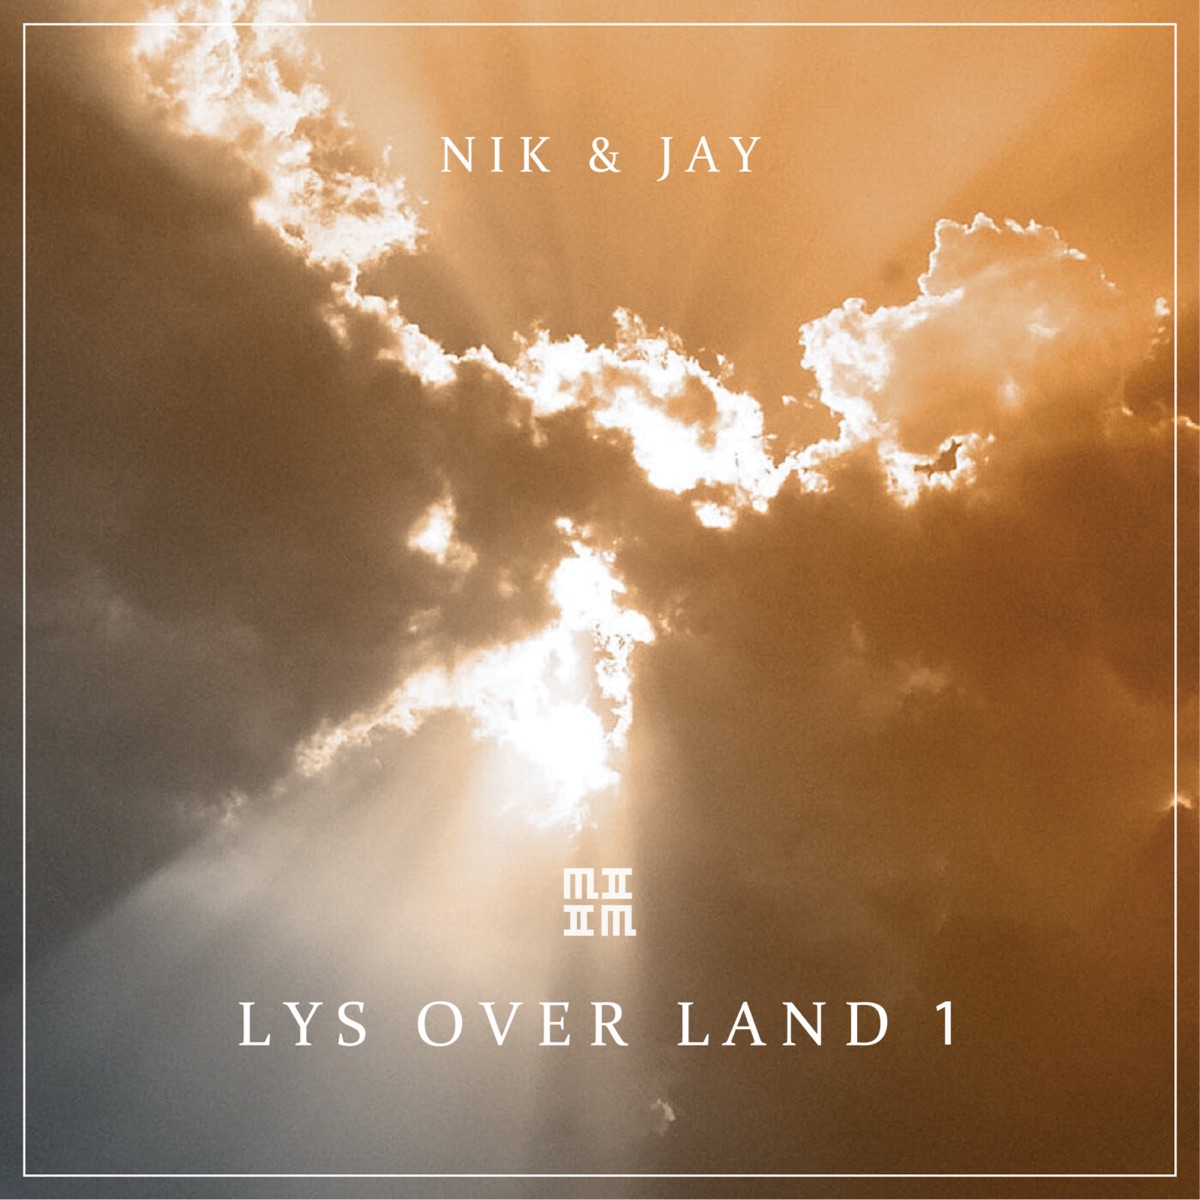 levering dinosaurus tobak Lys Over Land 1 - Single by Nik & Jay on Apple Music